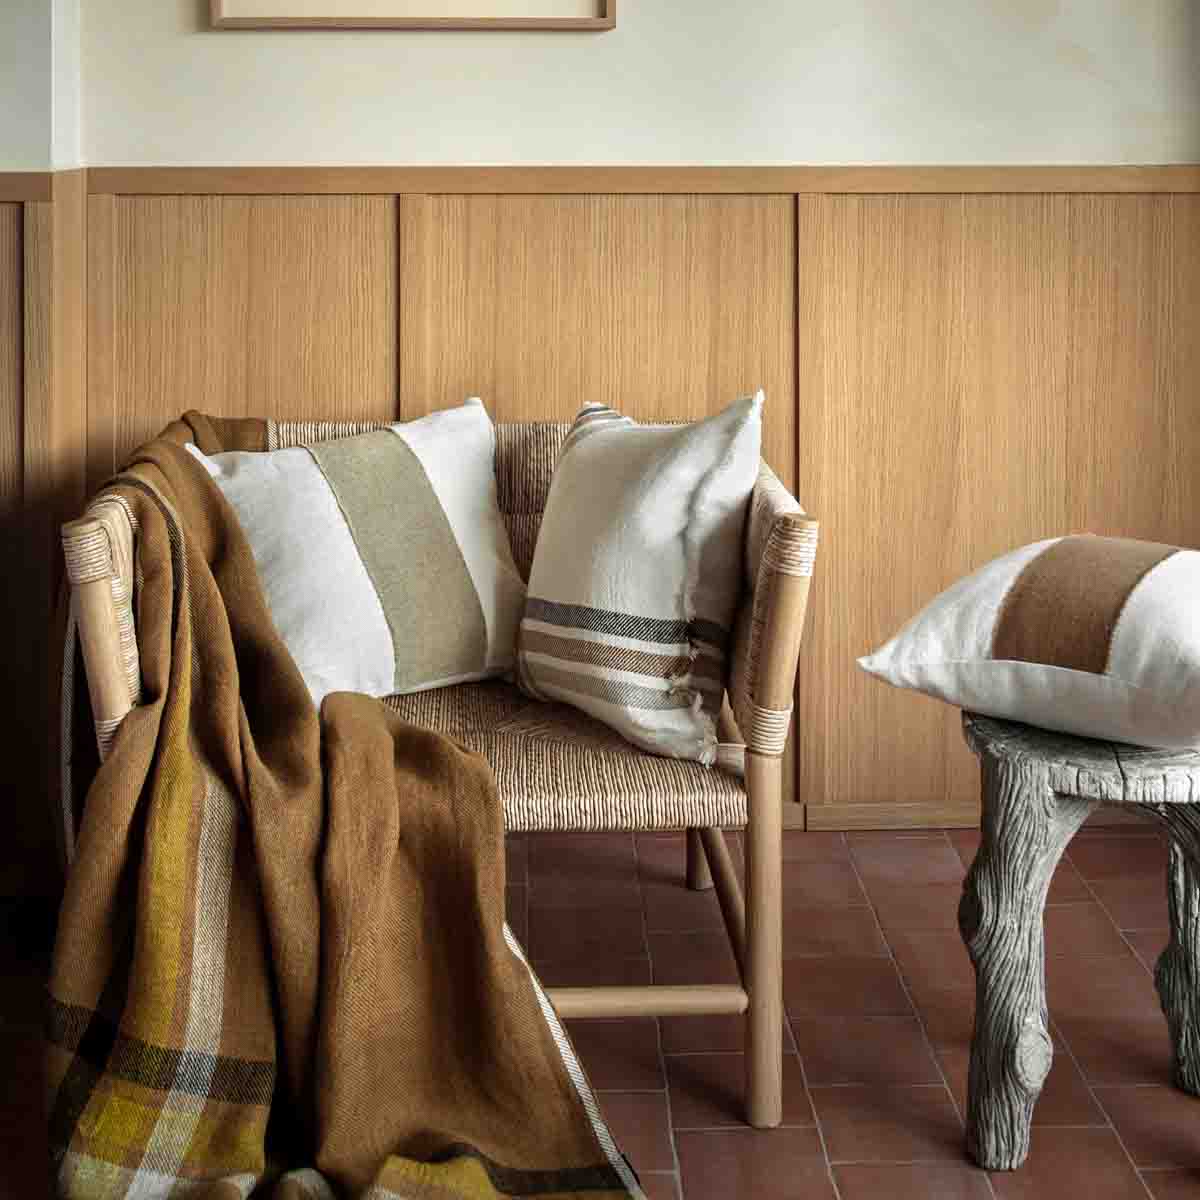 Square linen cushion cover Malibu 45x45 cm - Harmony Haomy